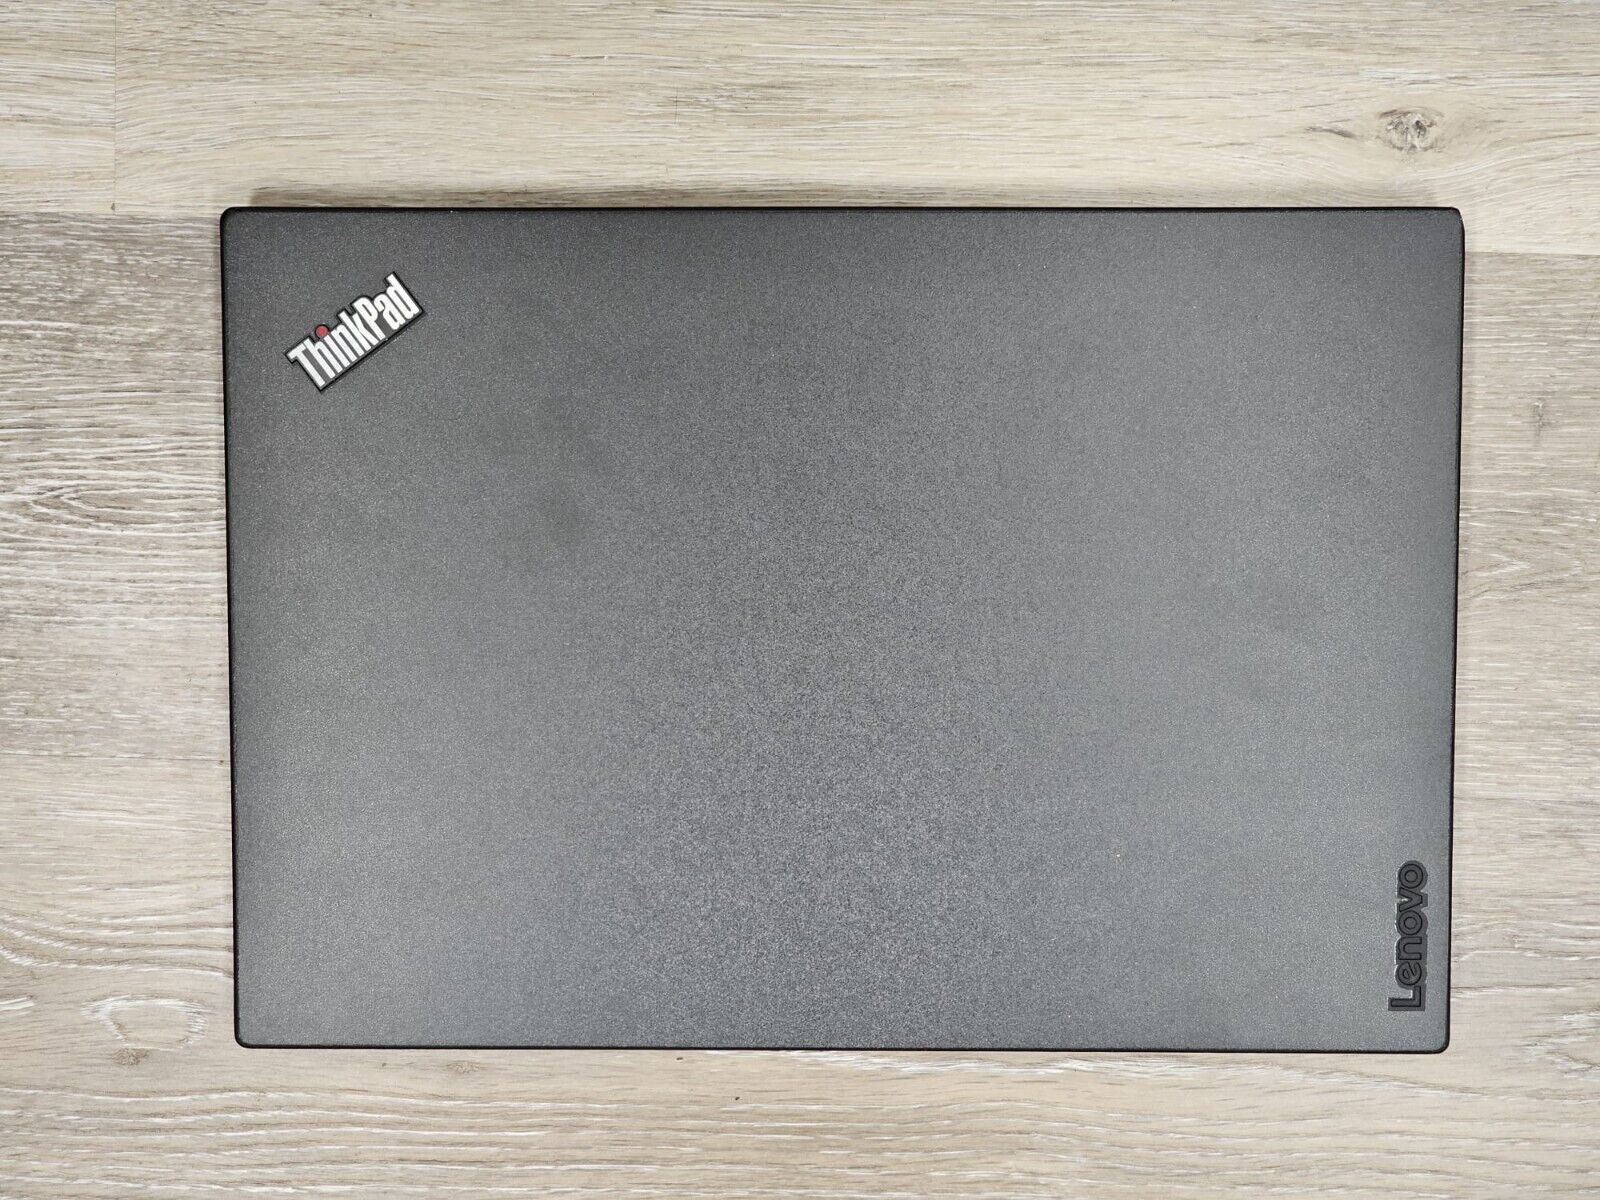 Lenovo T480 ThinkPad i5-8350U FHD Touch 8GB Ram 256GB SSD Win 10 Pro